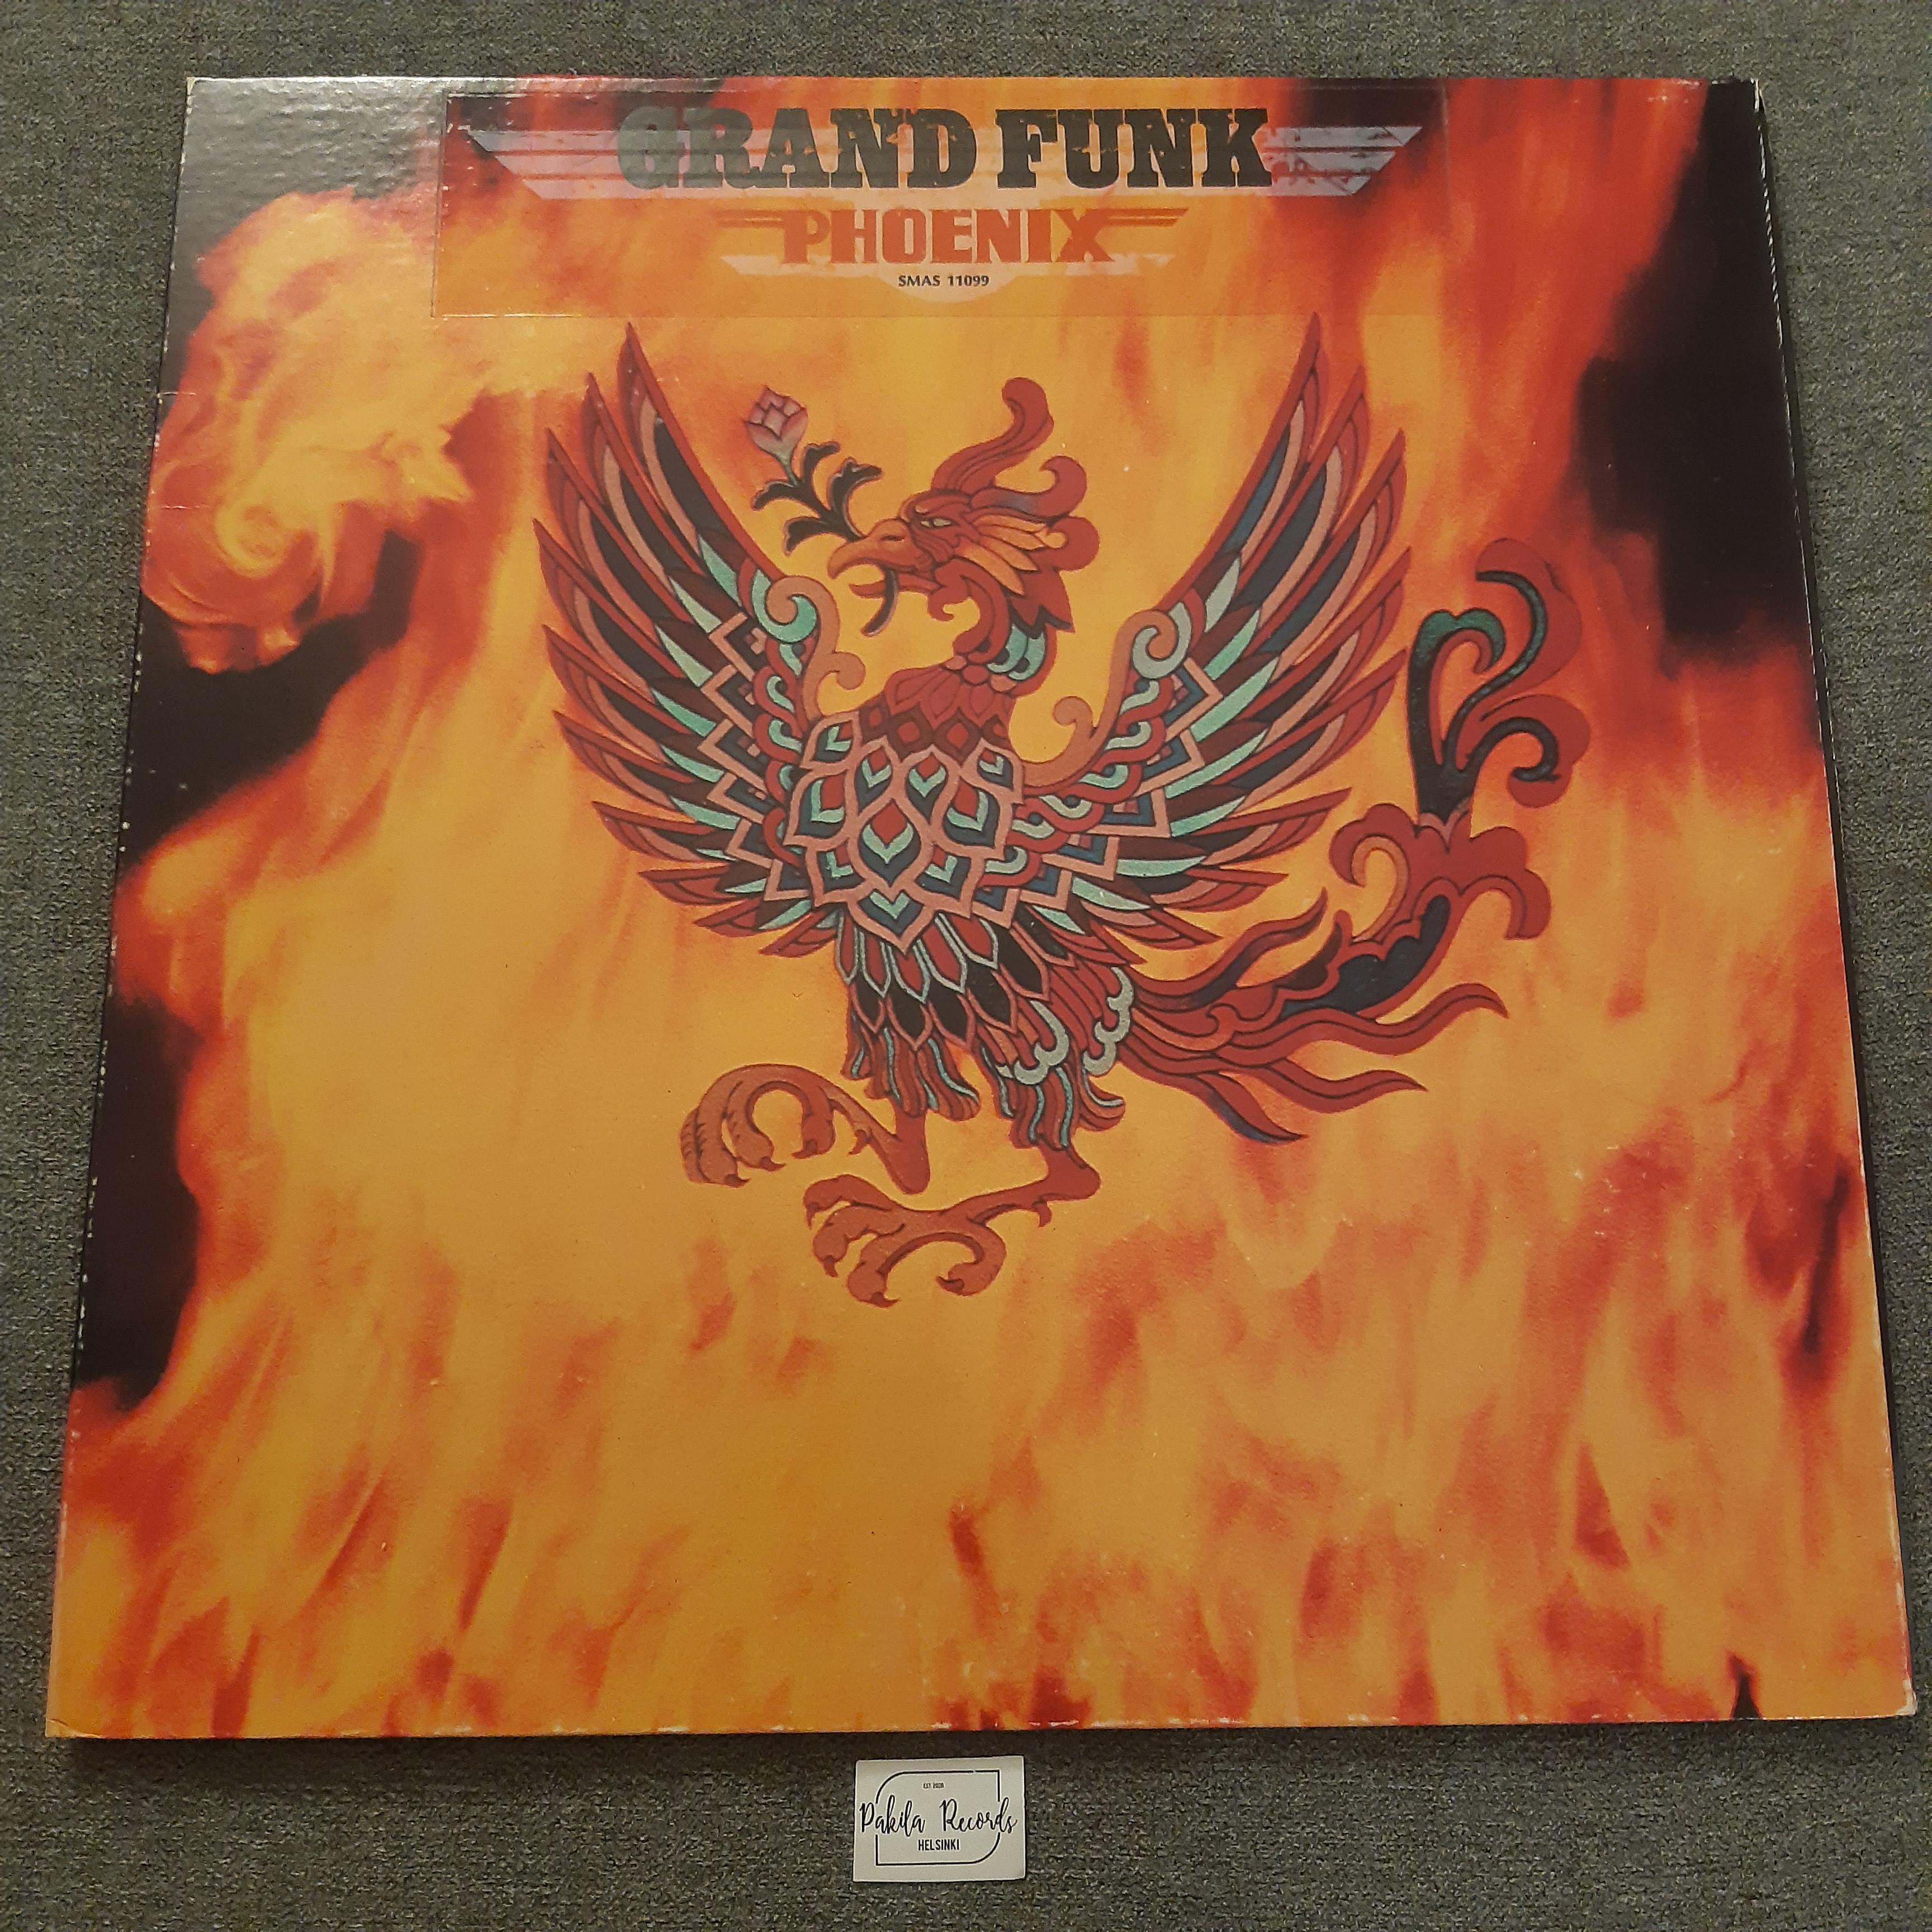 Grand Funk - Phoenix - LP (käytetty)